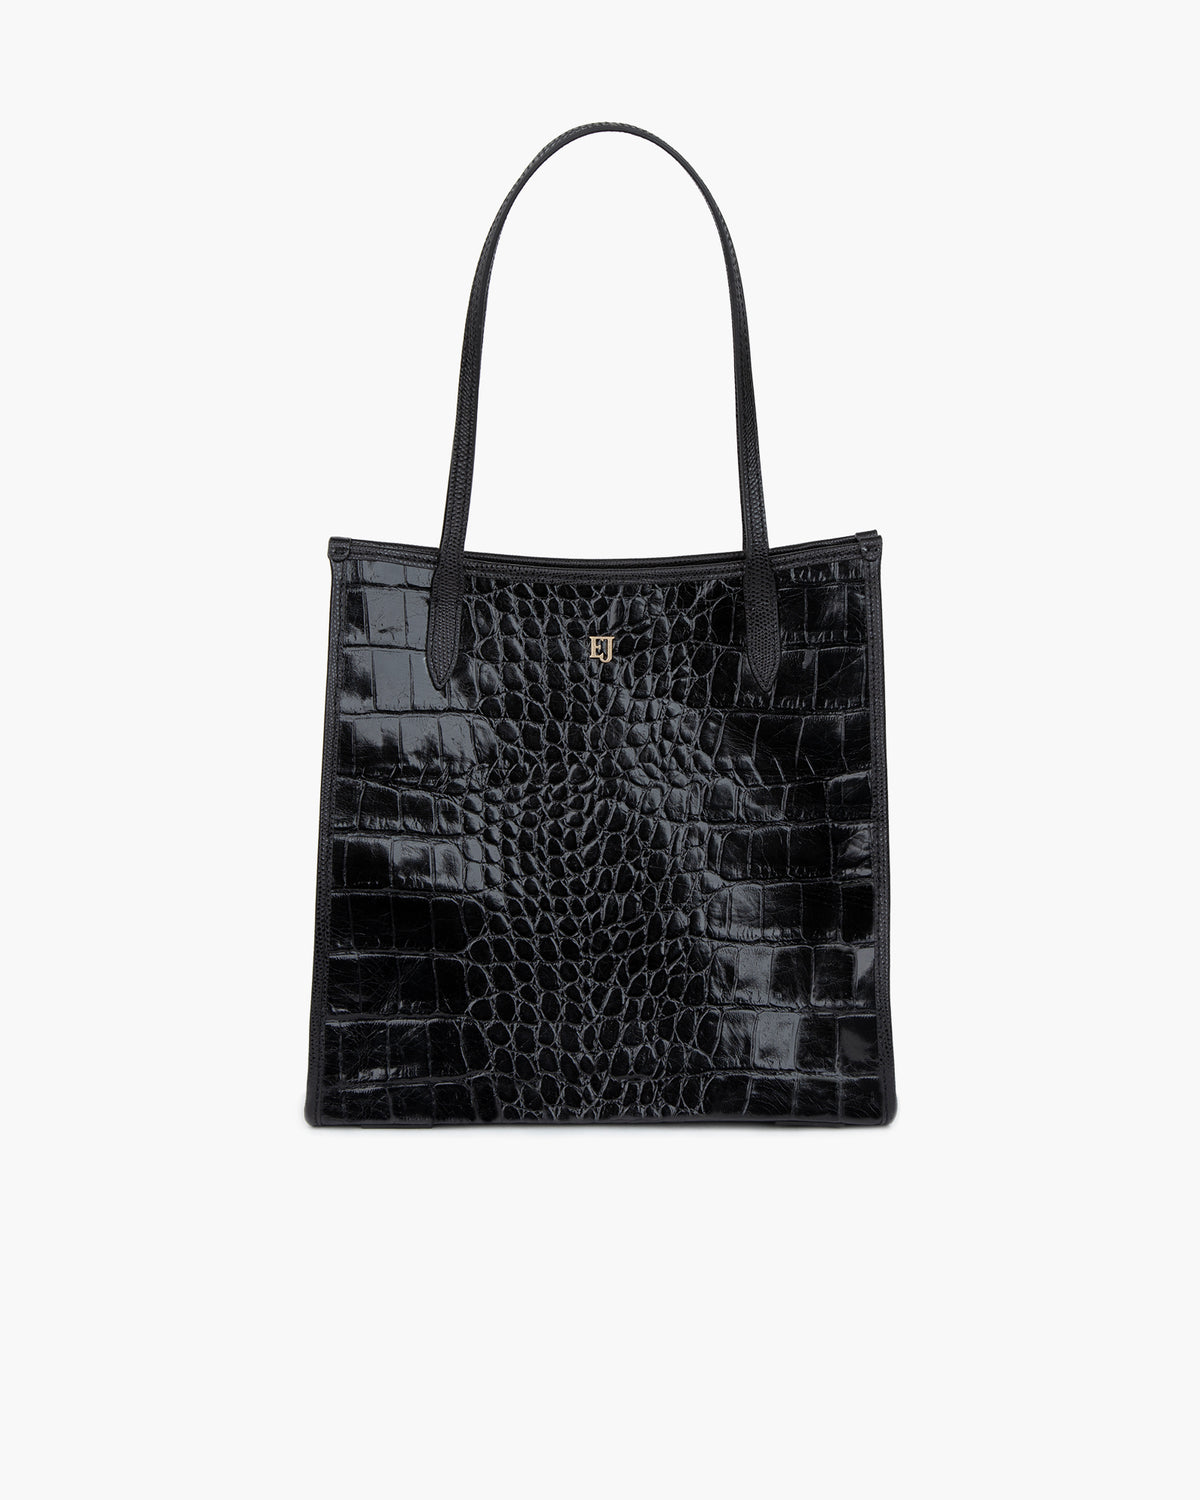 Lil Cote d'Azur Tote Bag, Mid-Size Bag, Designer's Bag, Eric Javits